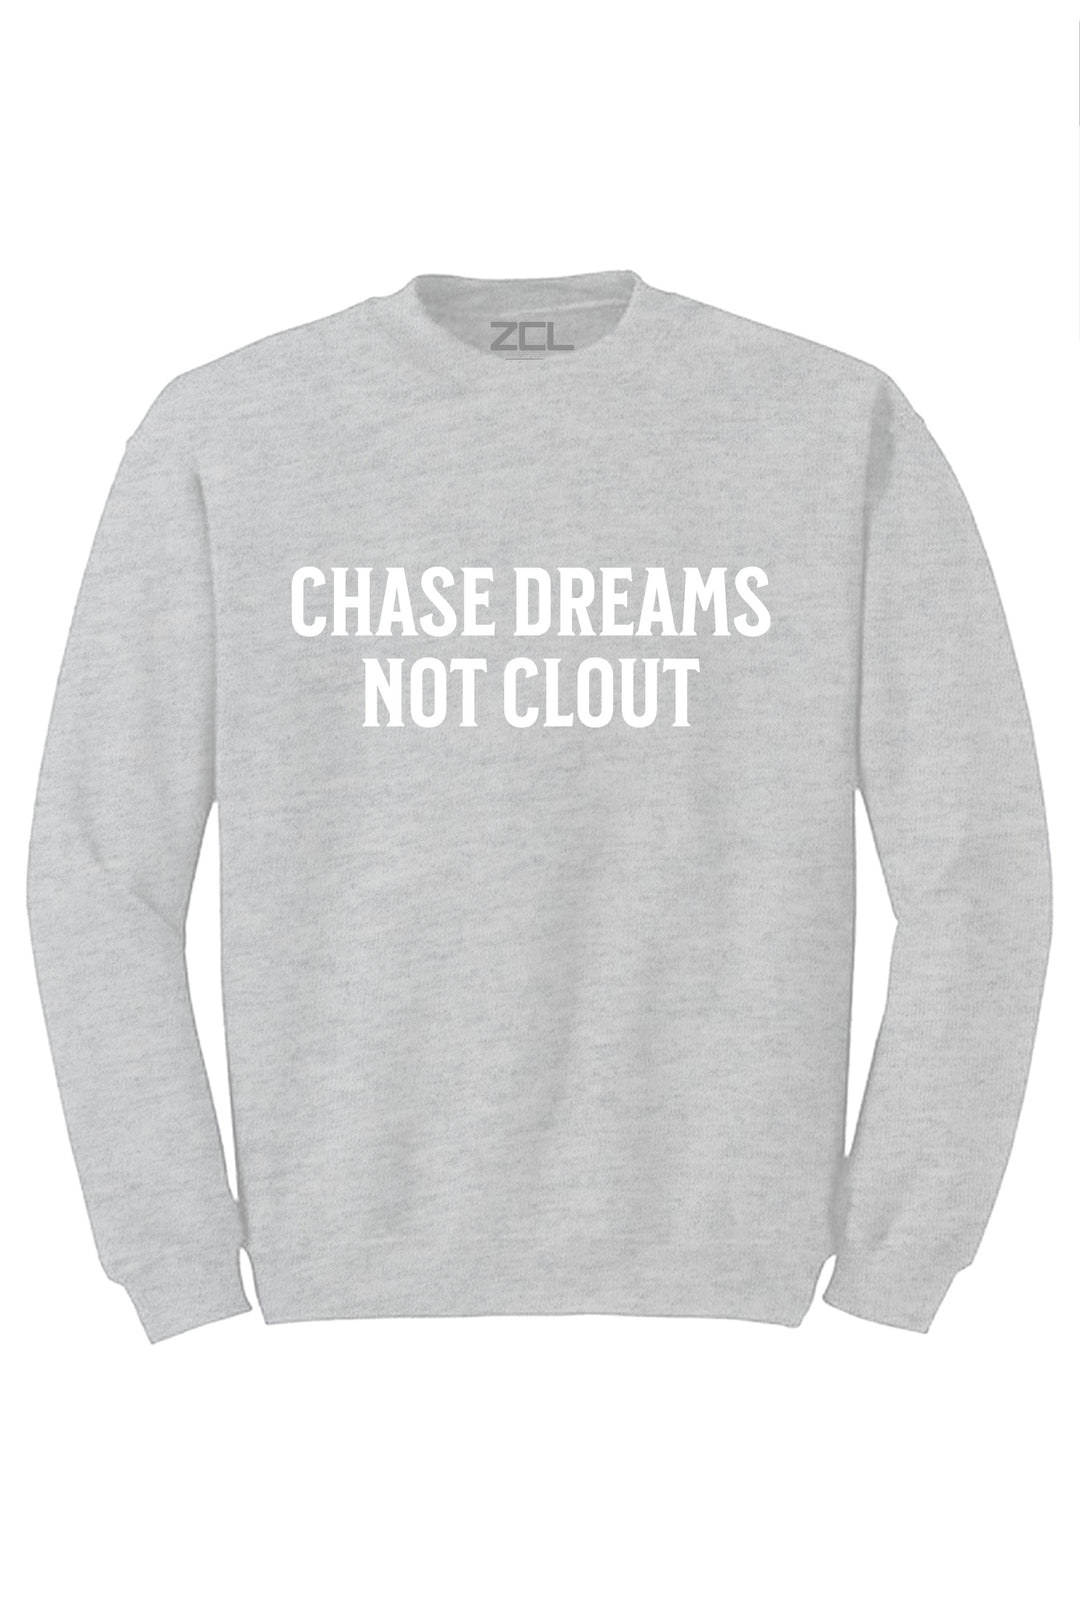 Chase Dreams Not Clout Crewneck Sweatshirt (White Logo) - Zamage